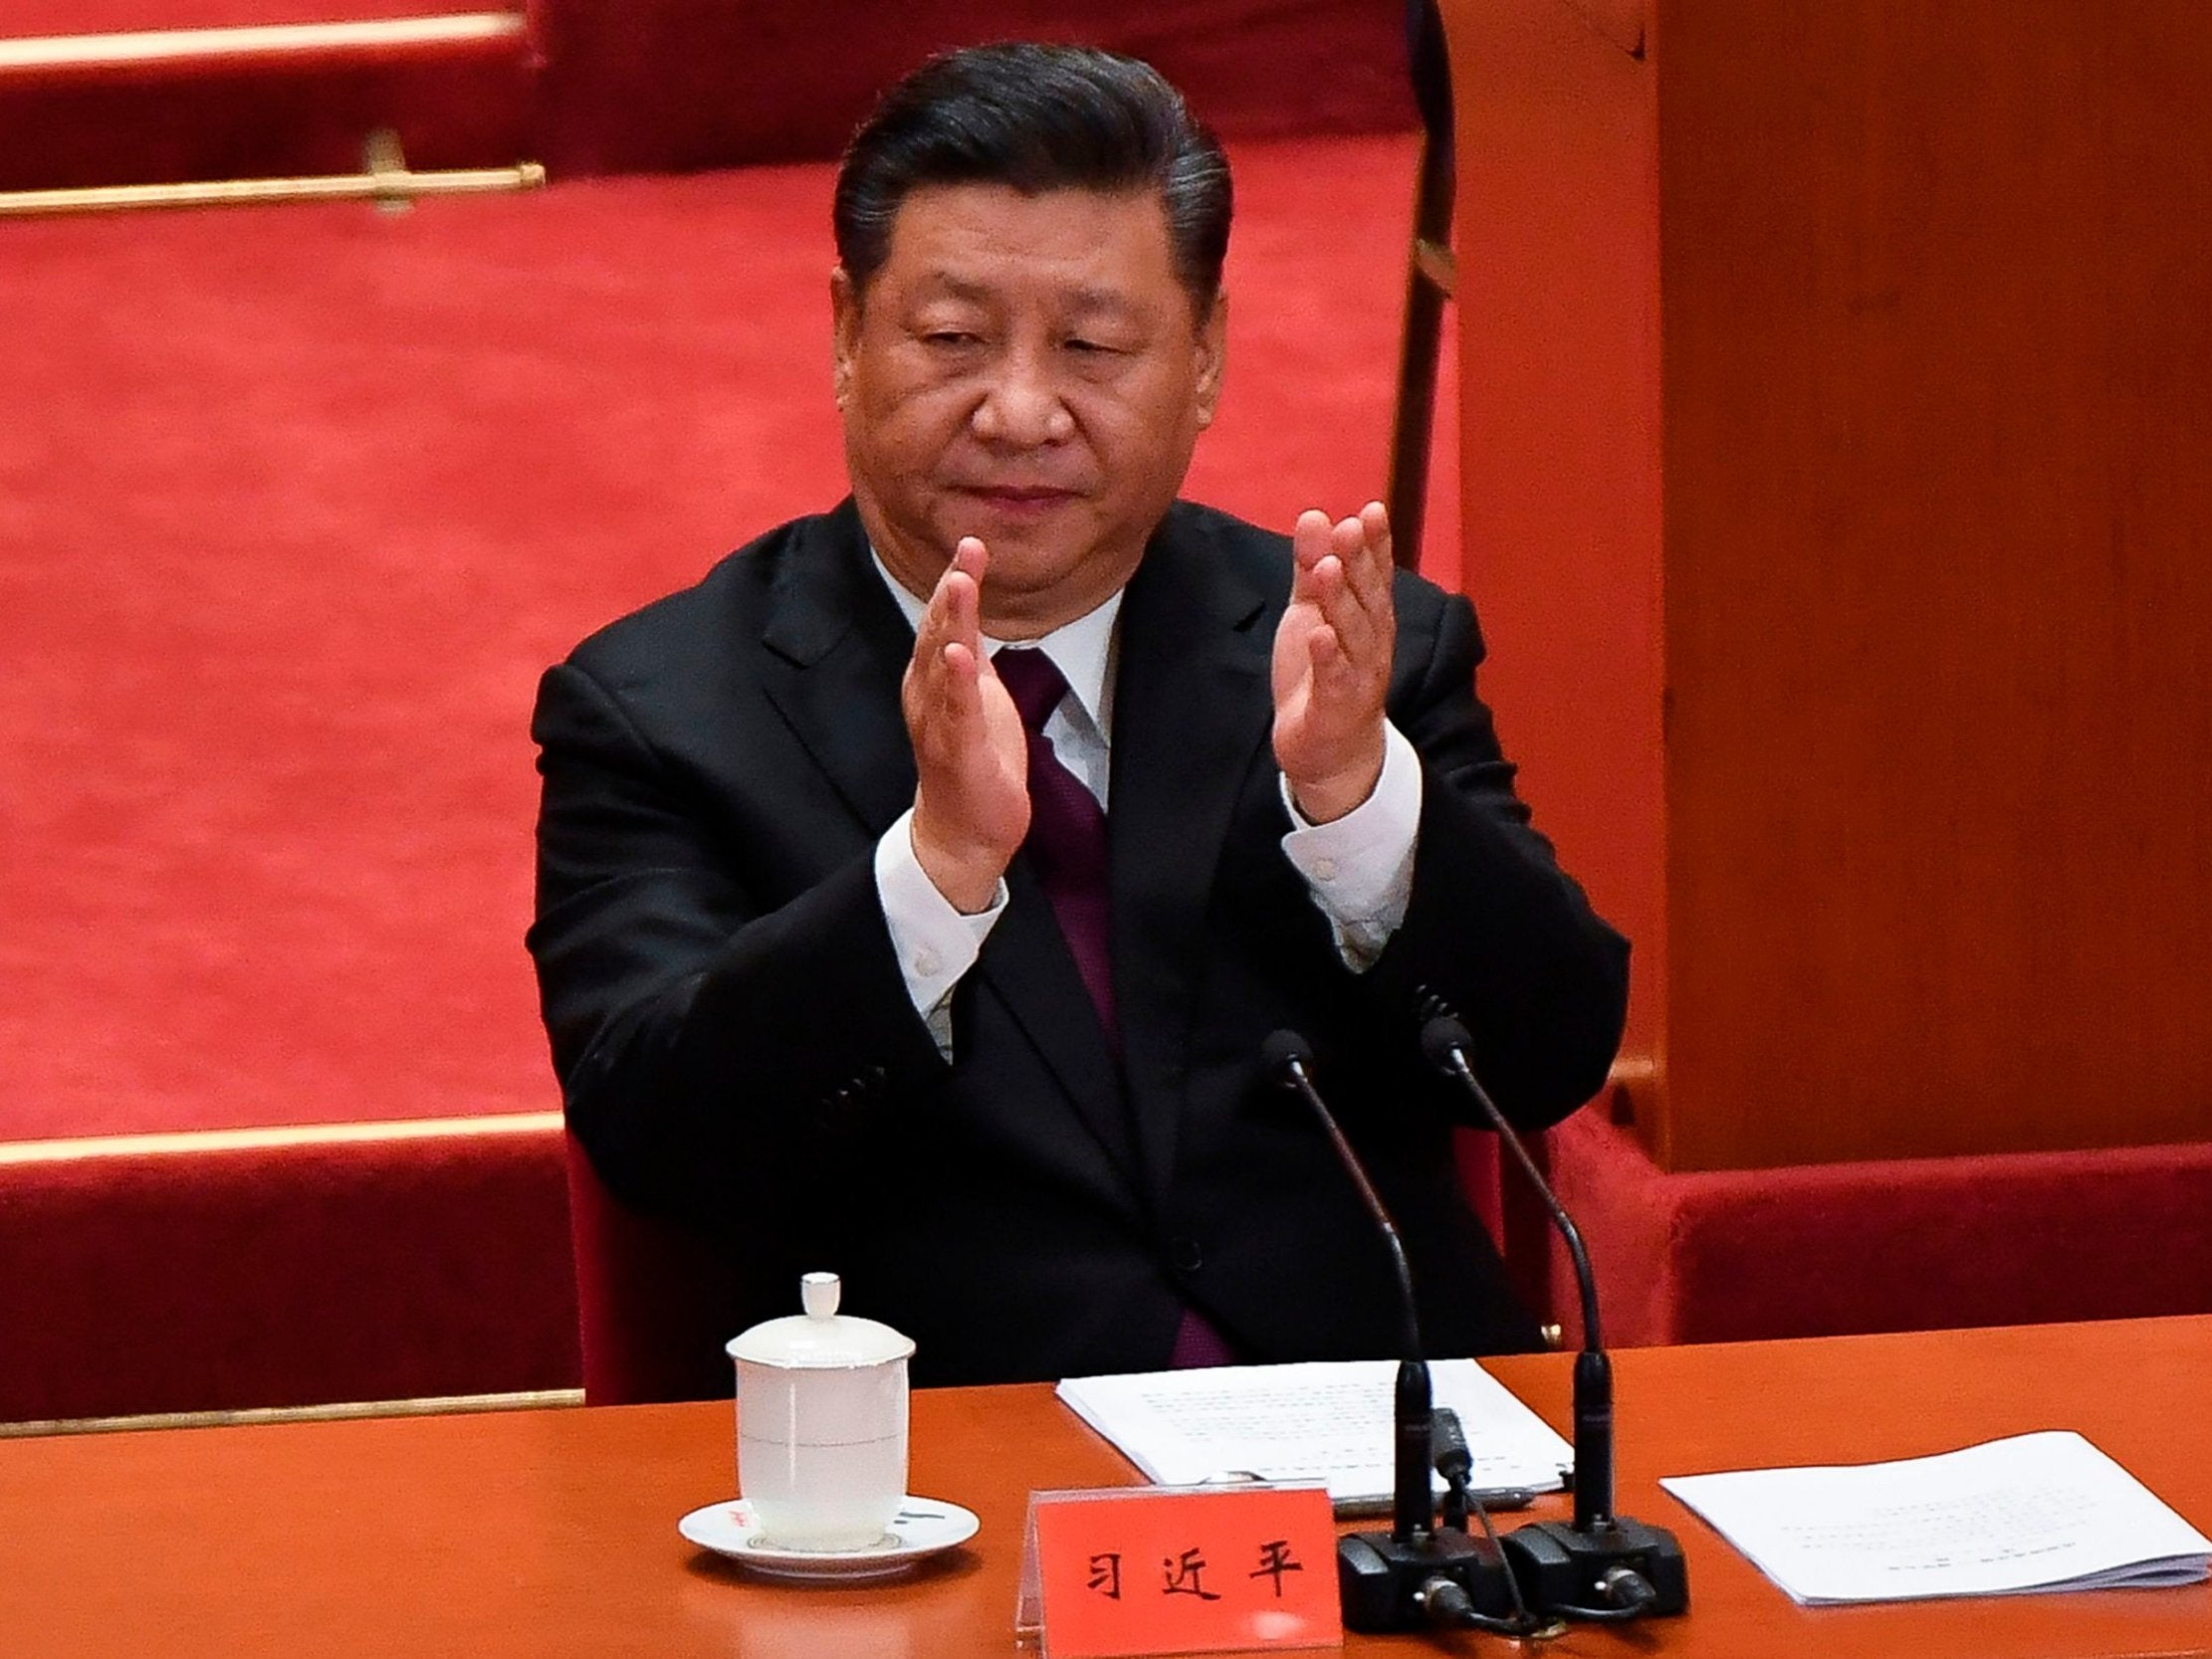 Xi Jinping said no one can 'dictate' China's economic development path